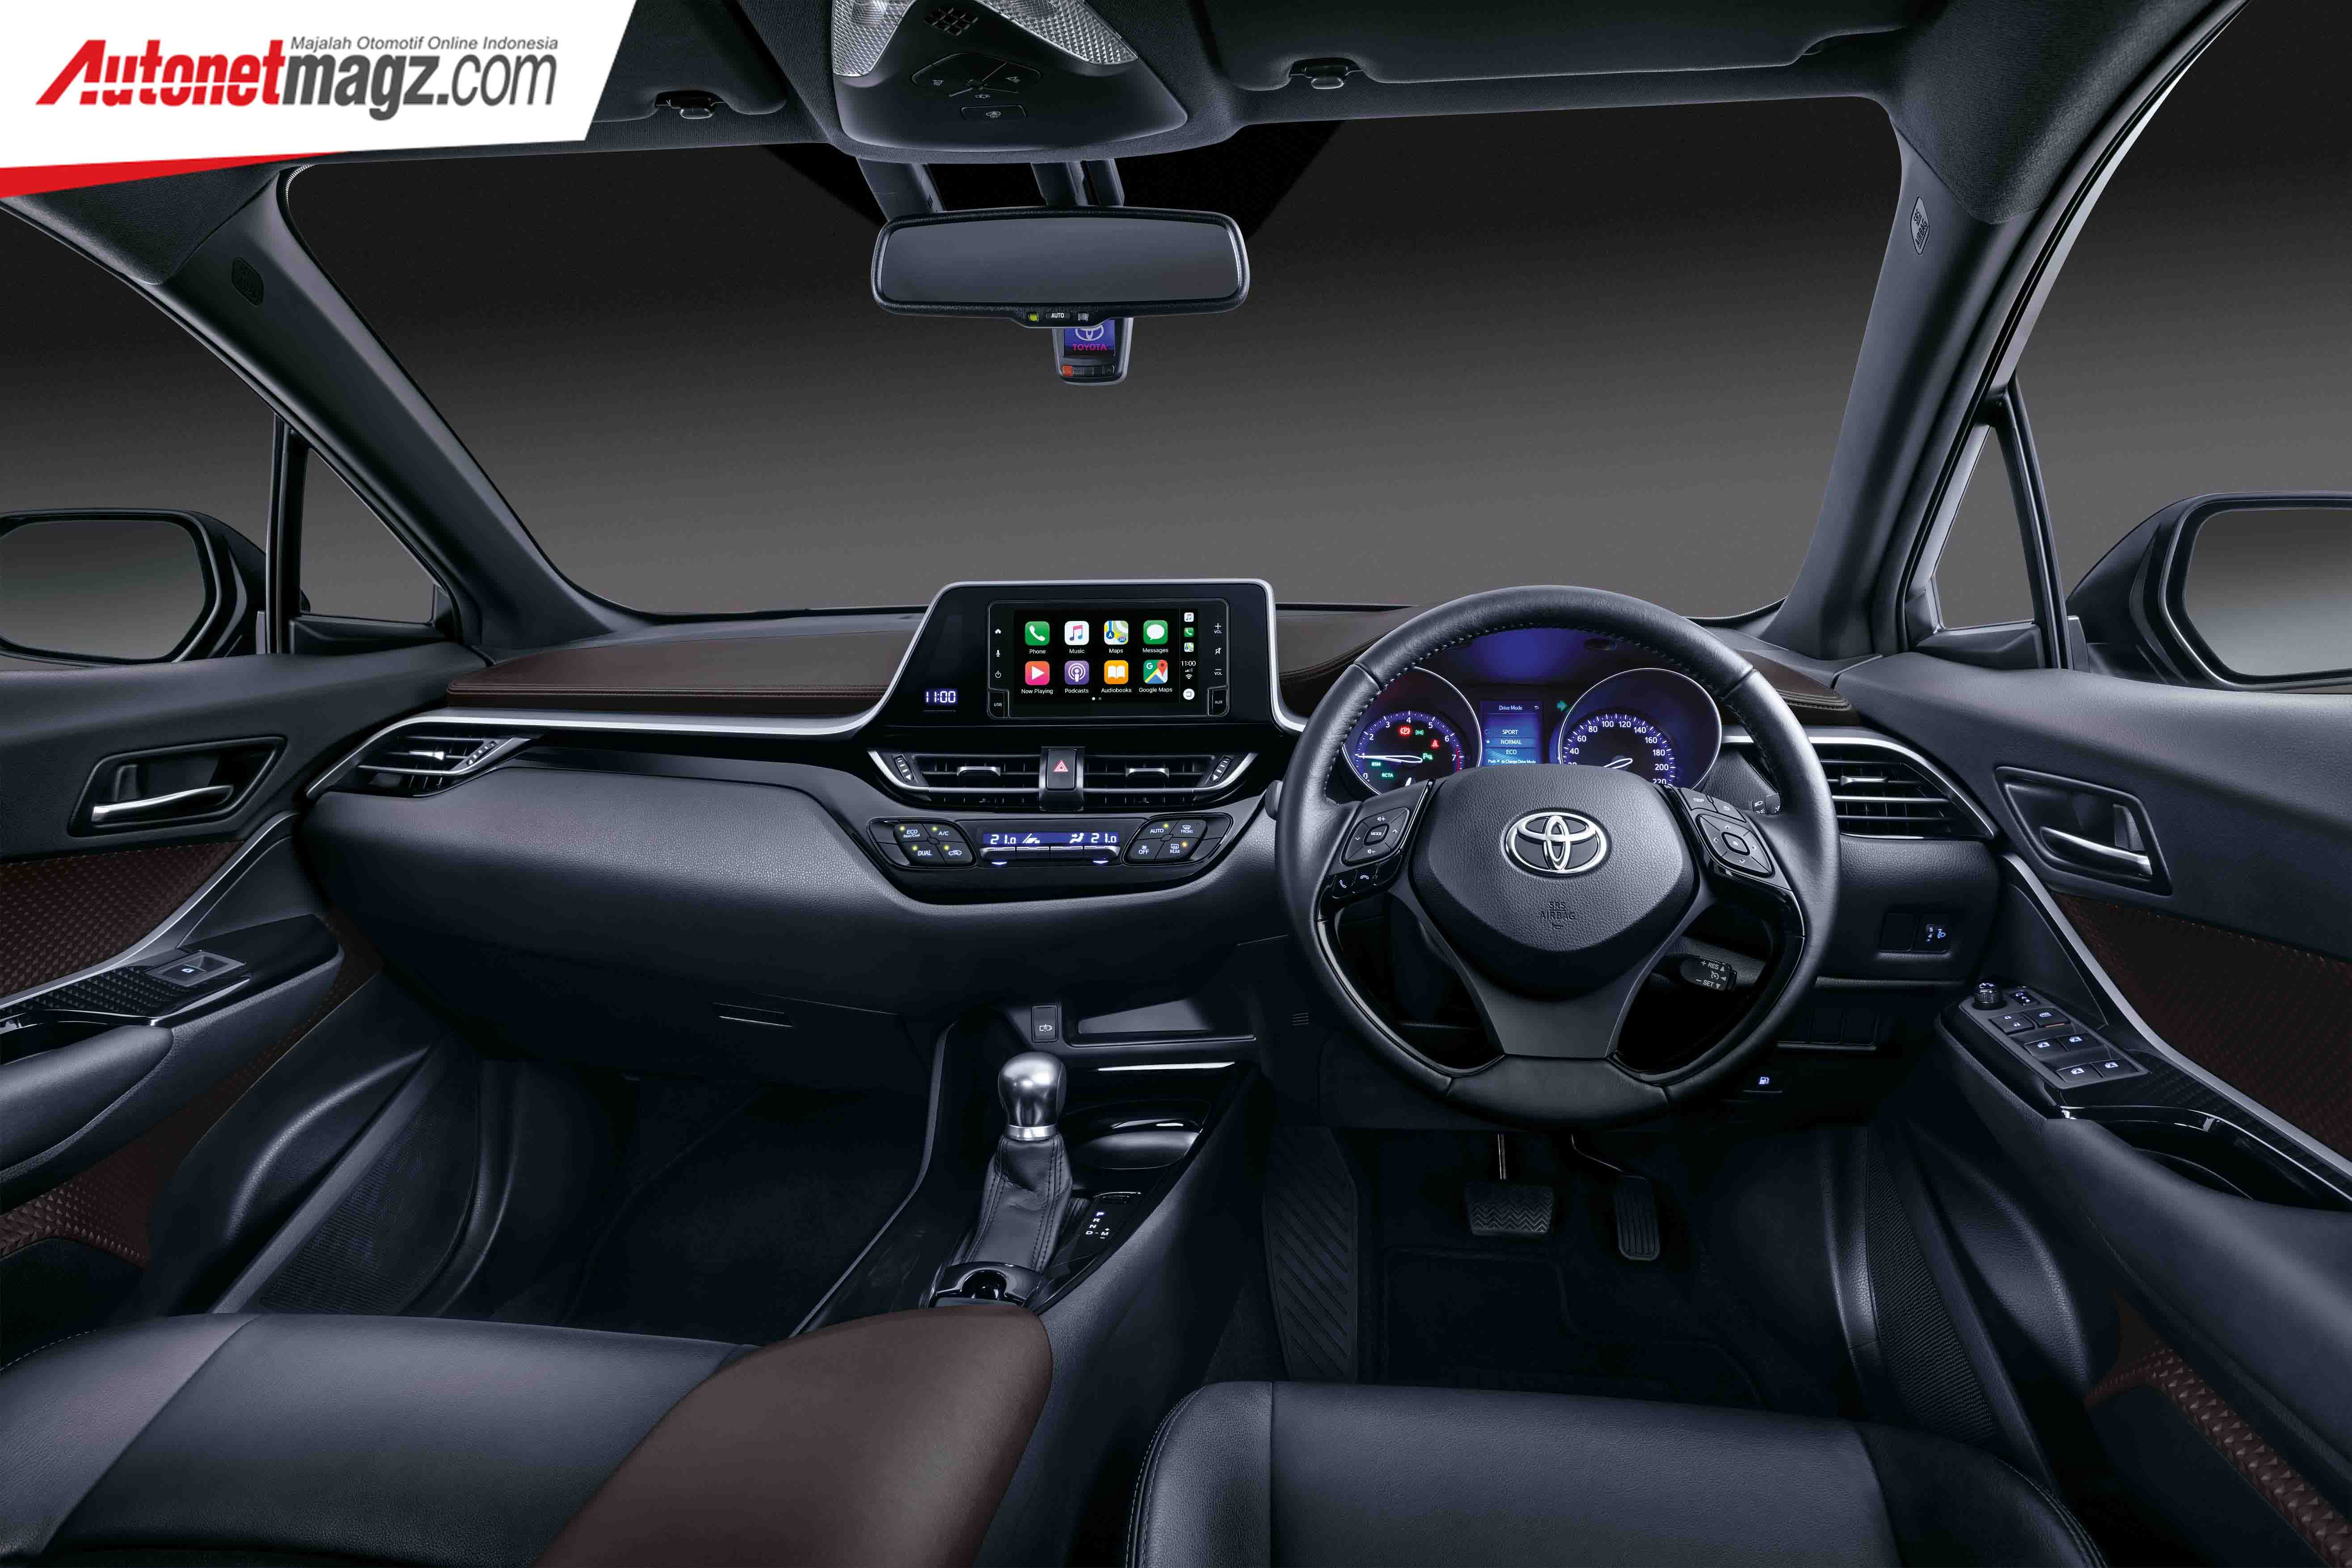 Toyota C HR 2019 interior AutonetMagz Review Mobil 